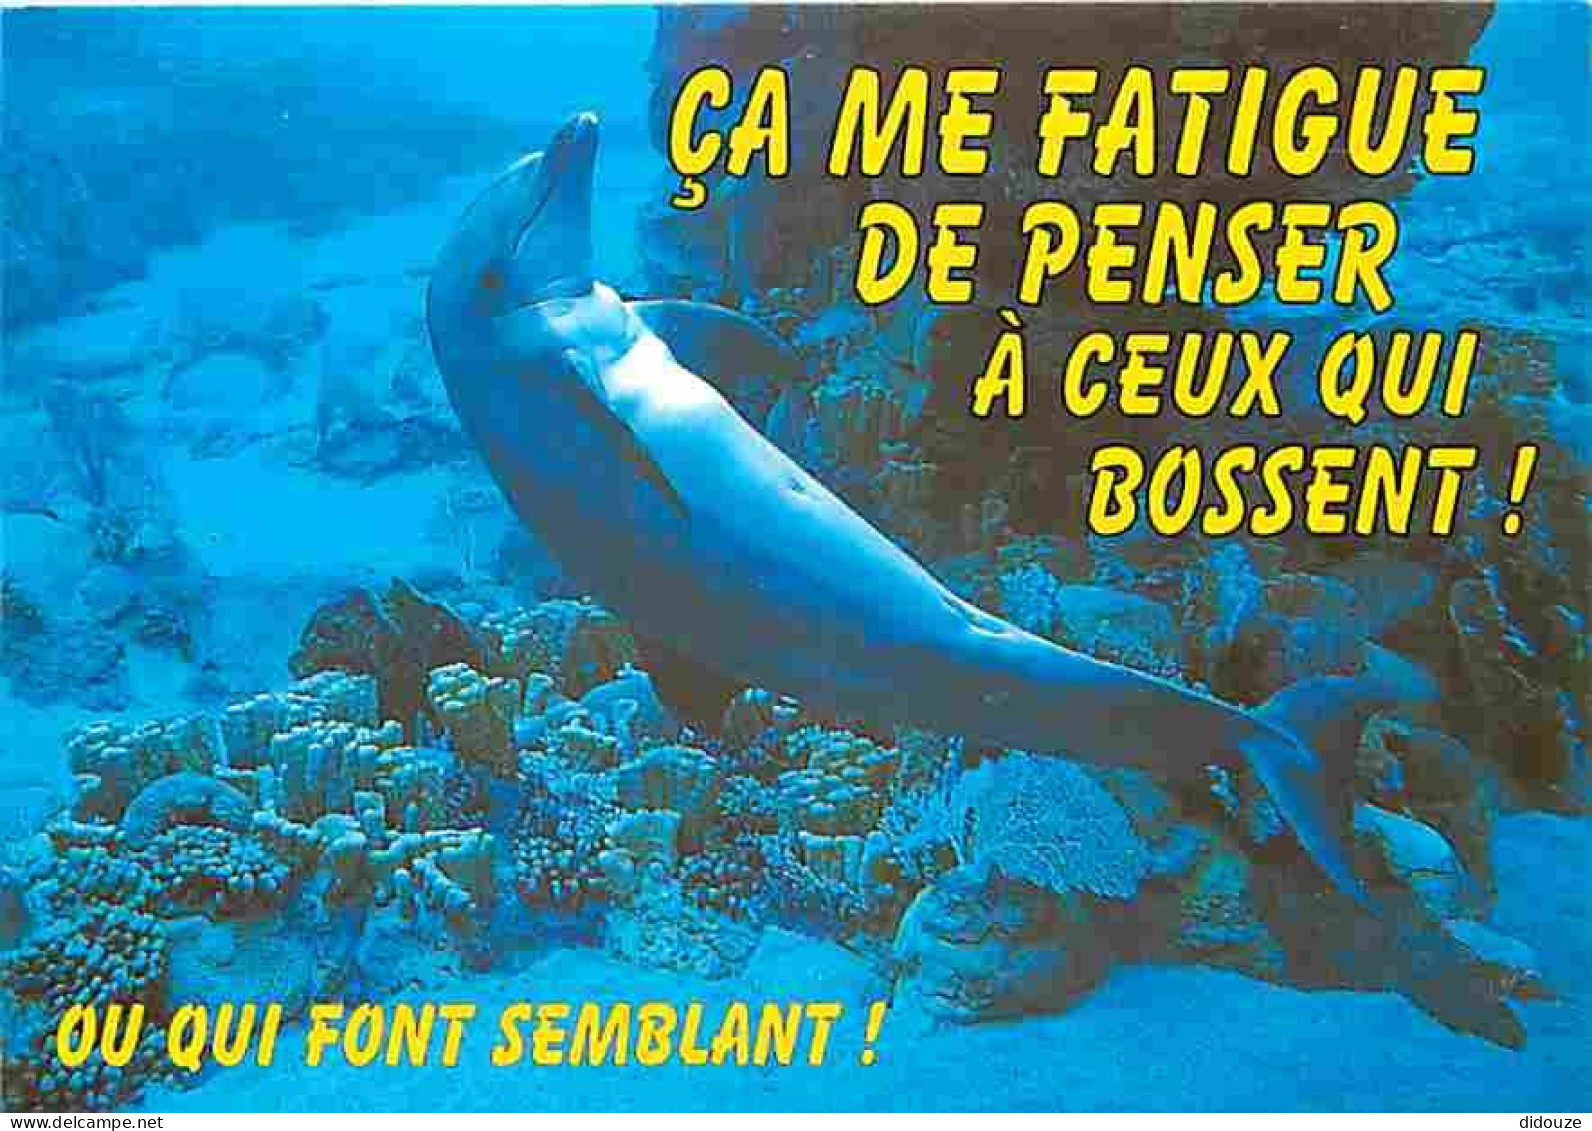 Animaux - Dauphins - CPM - Voir Scans Recto-Verso - Delfines